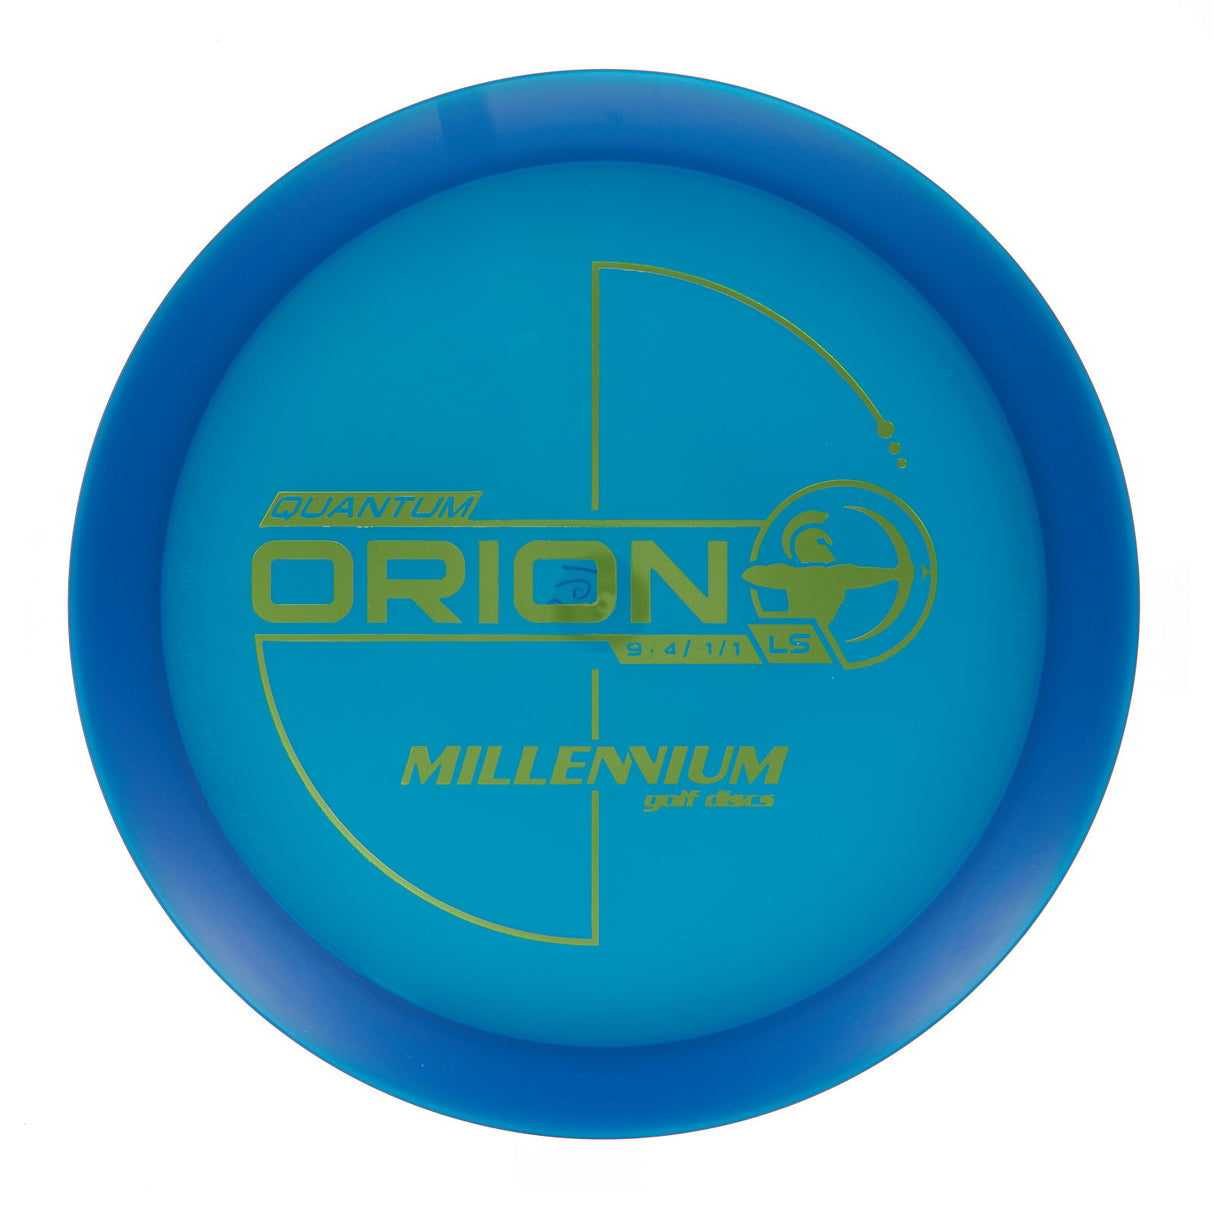 Millennium Orion LS - Quantum  169g | Style 0002